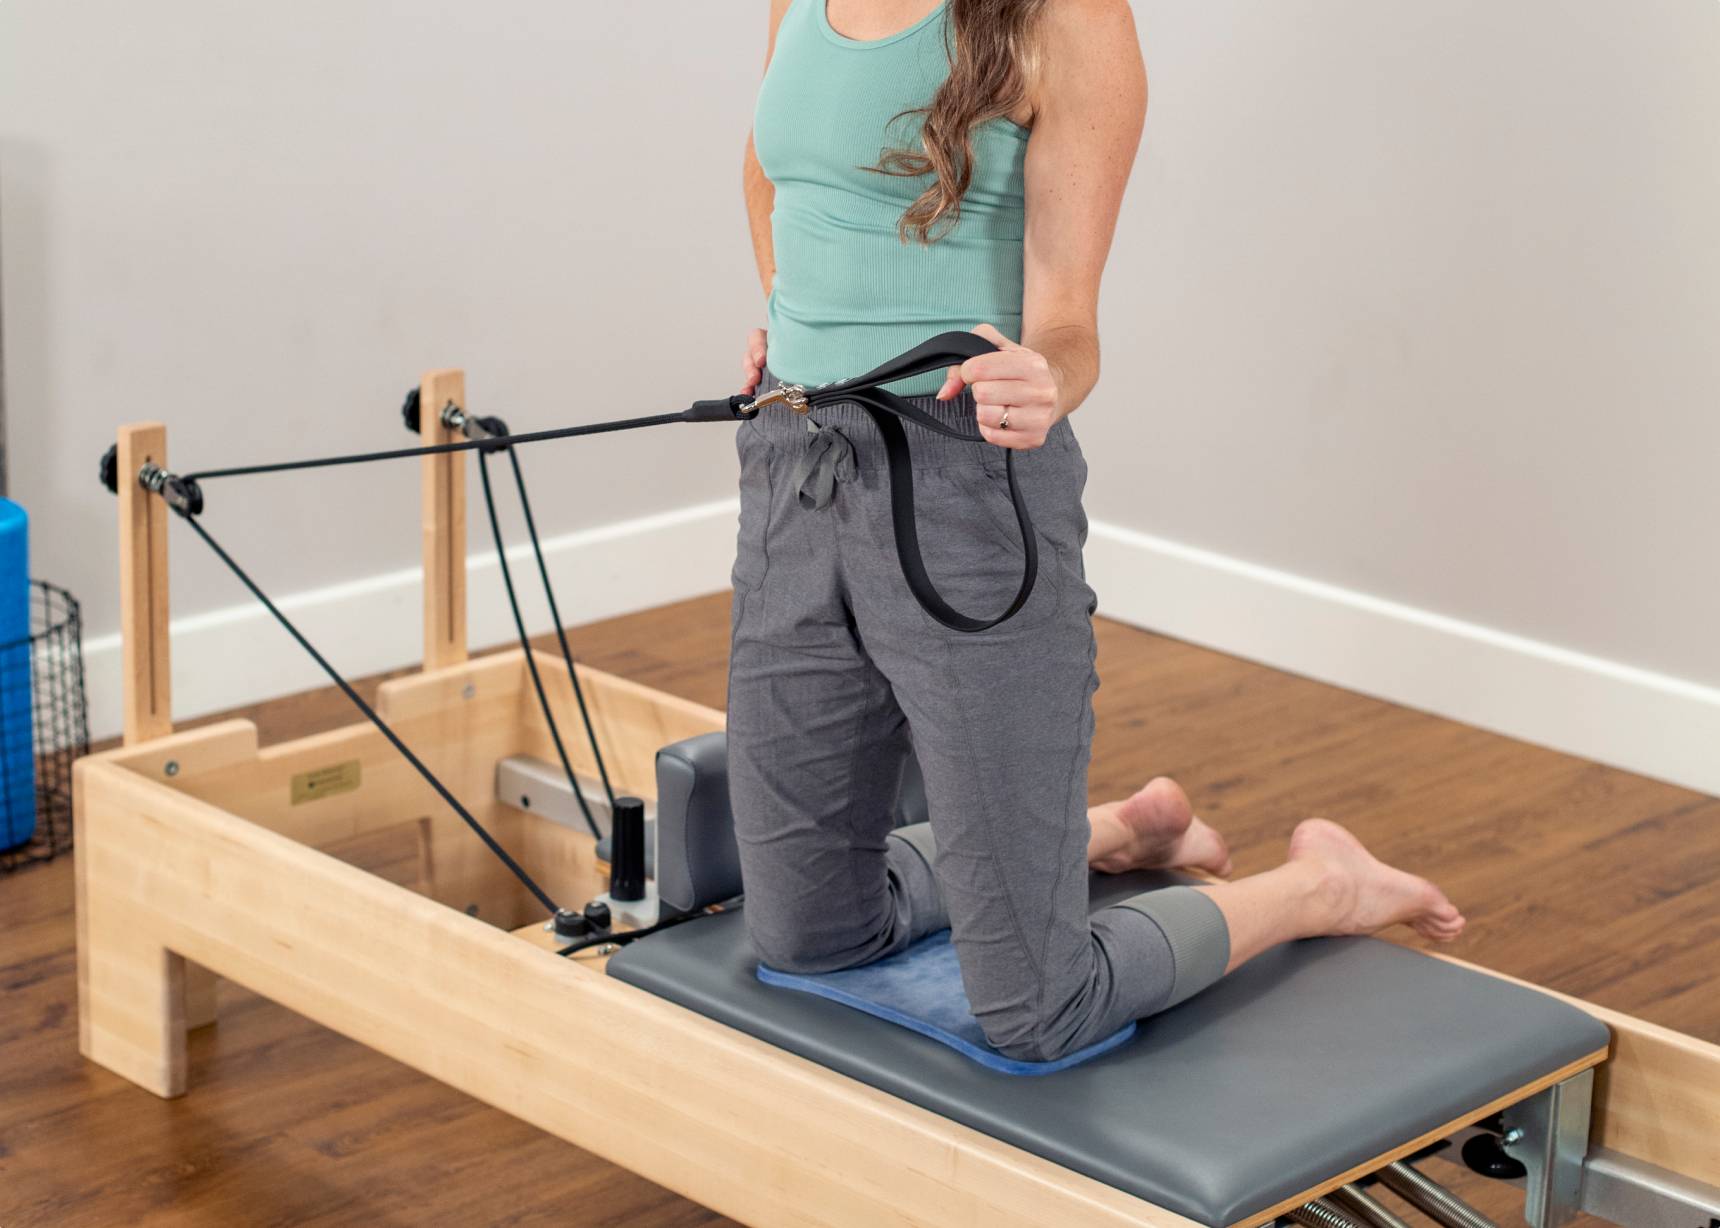 Pilates Reformer Pad Pilates Mat for Exercising Beginners Balance Training